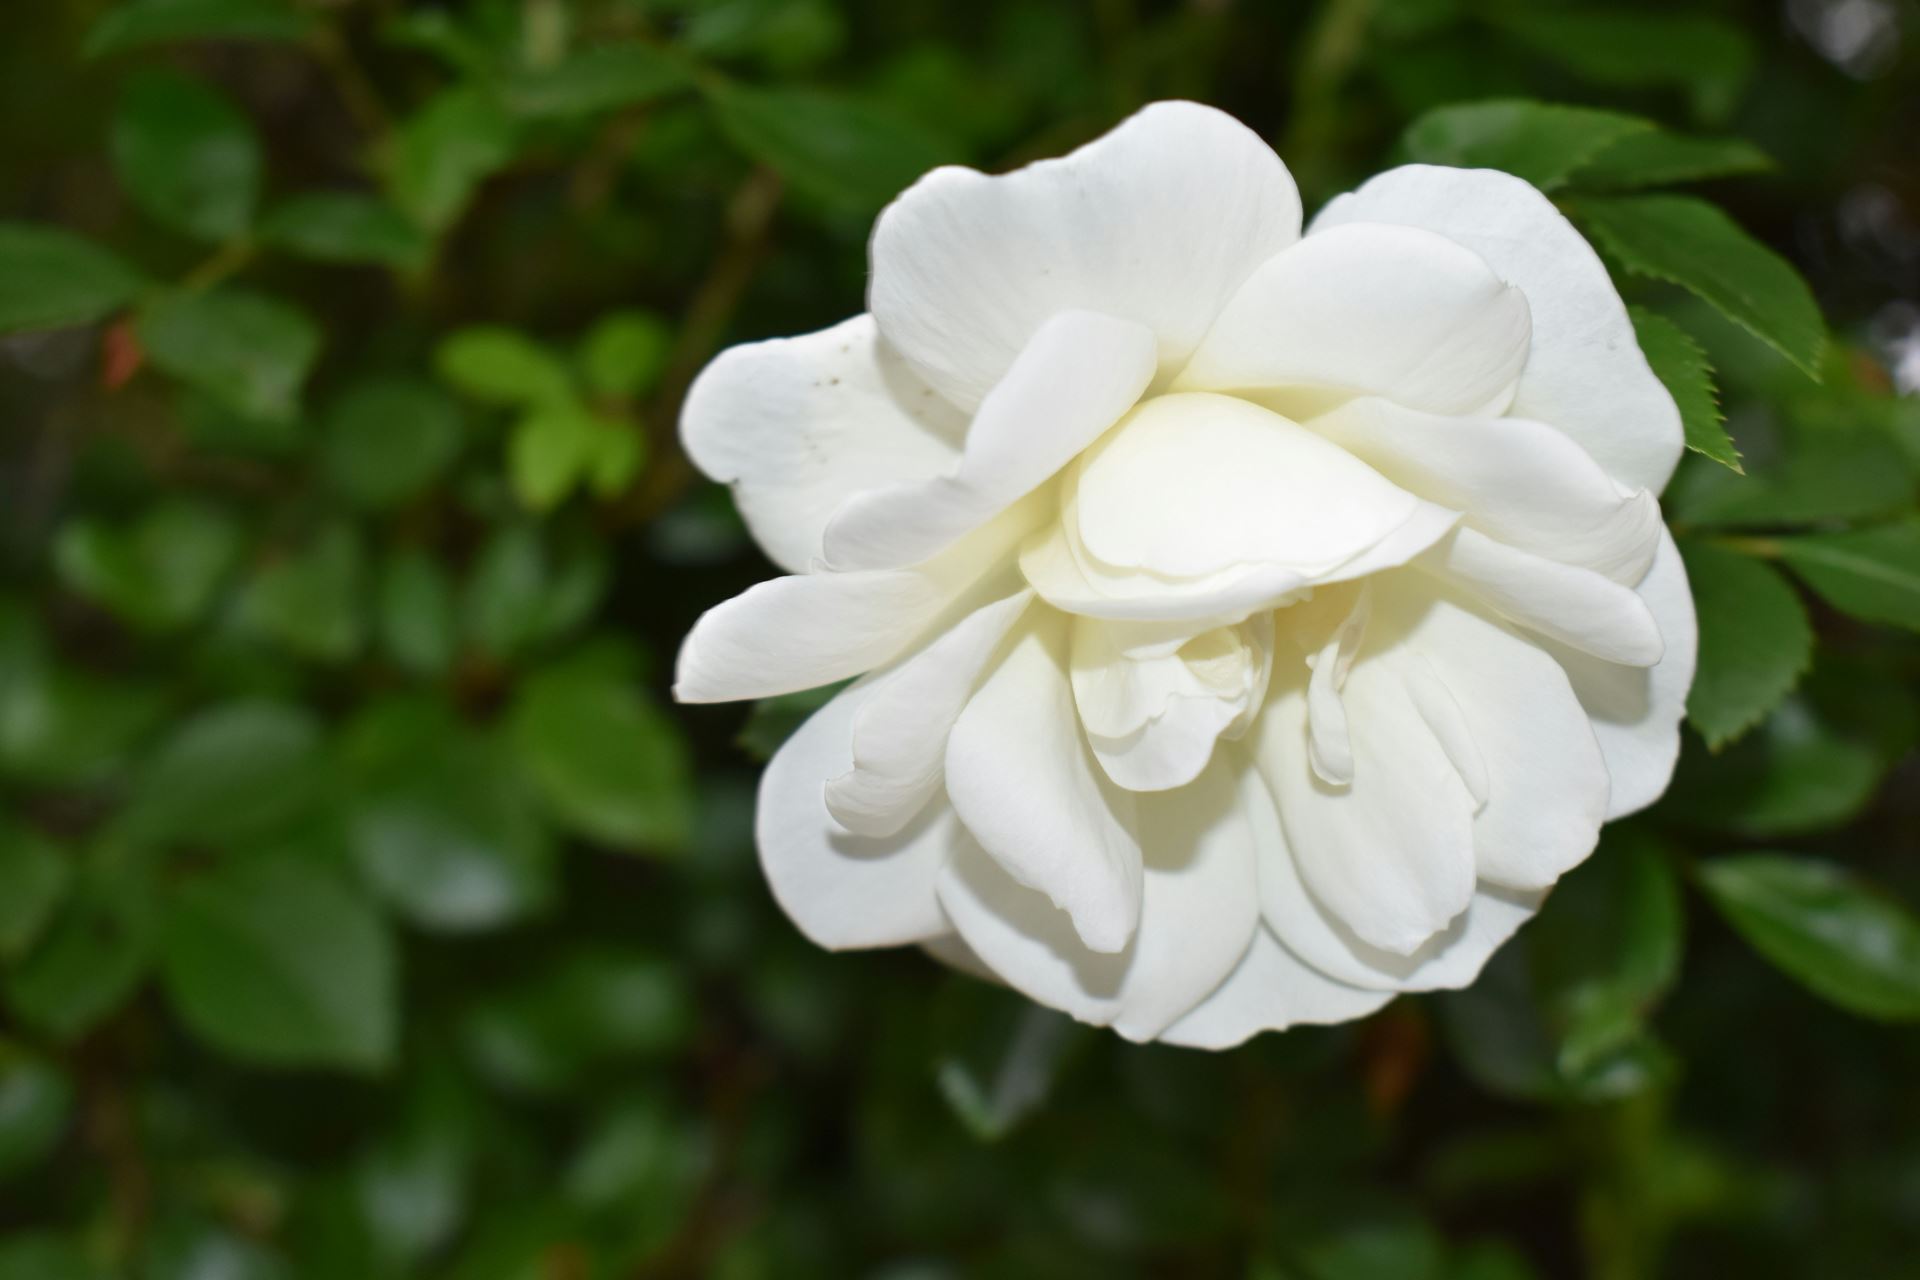 A white rose